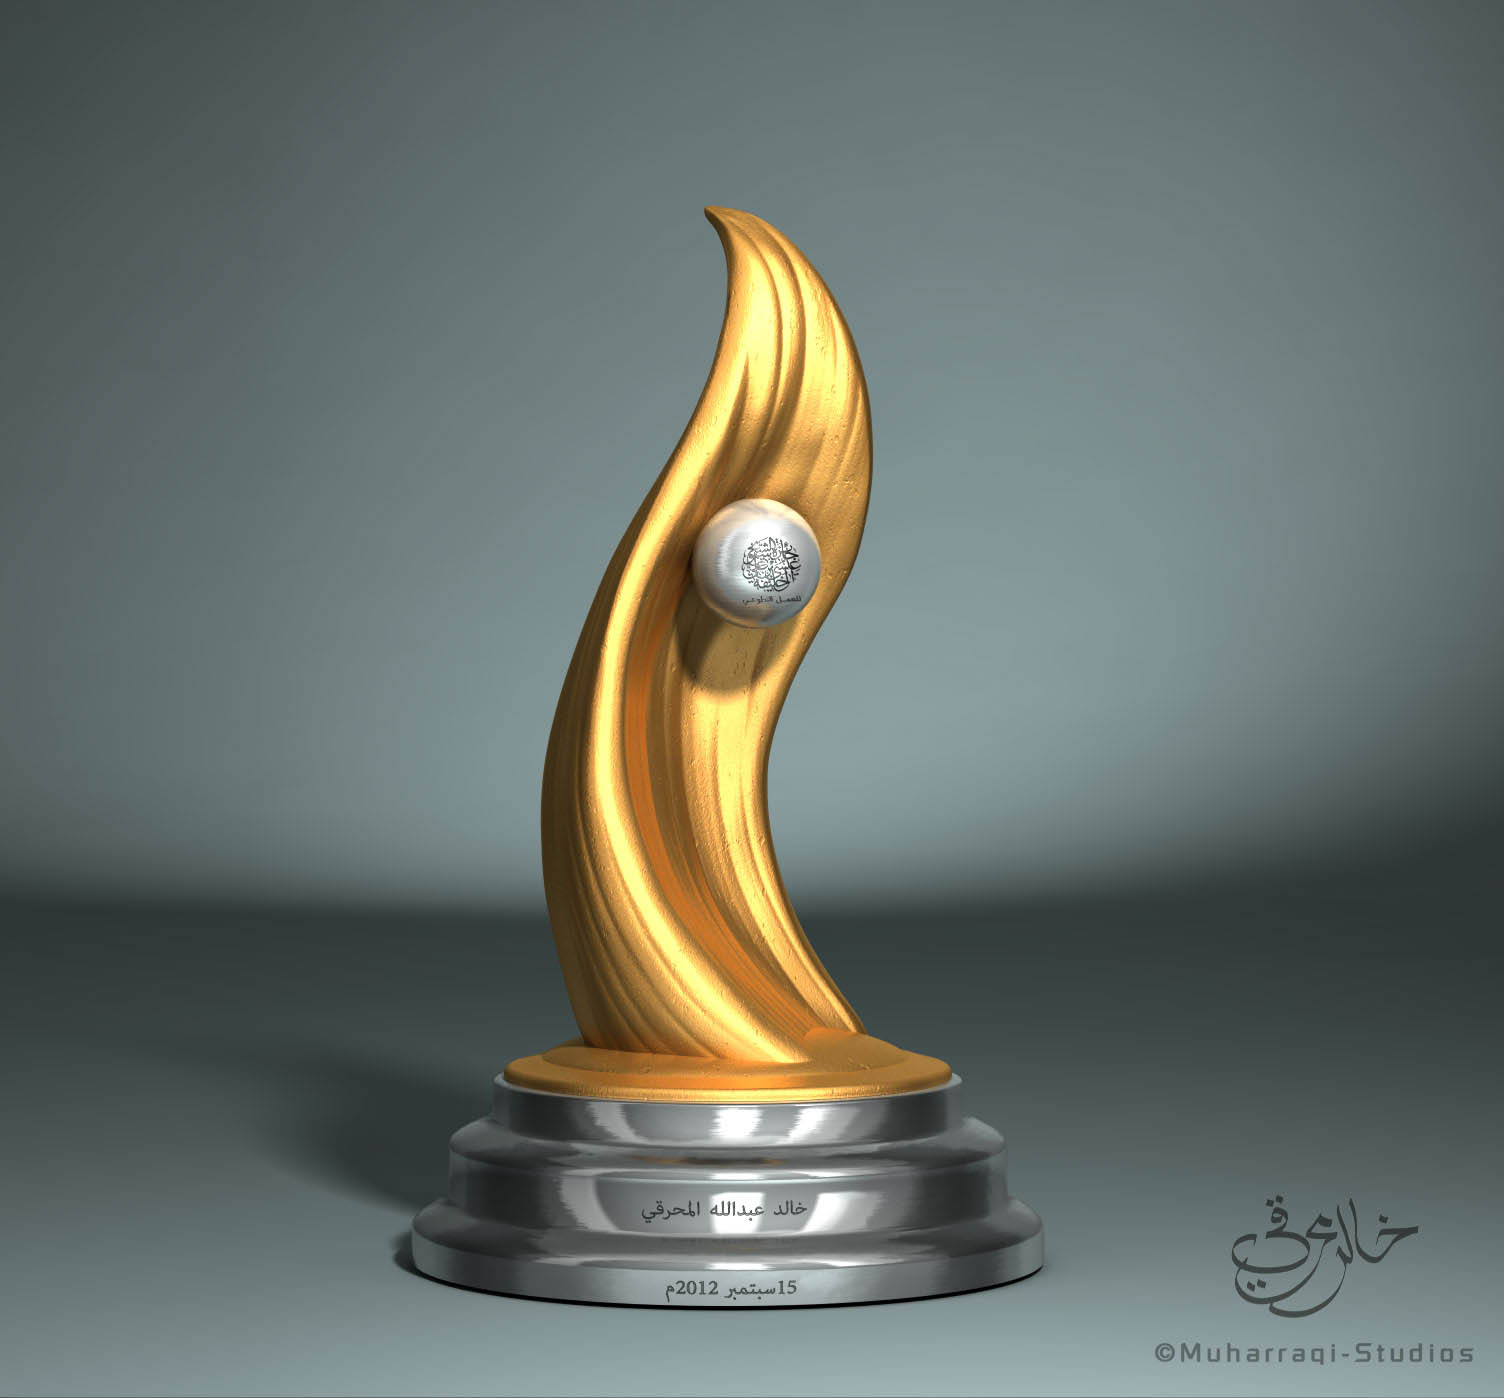 Trophy Design - Muharraqi Studios